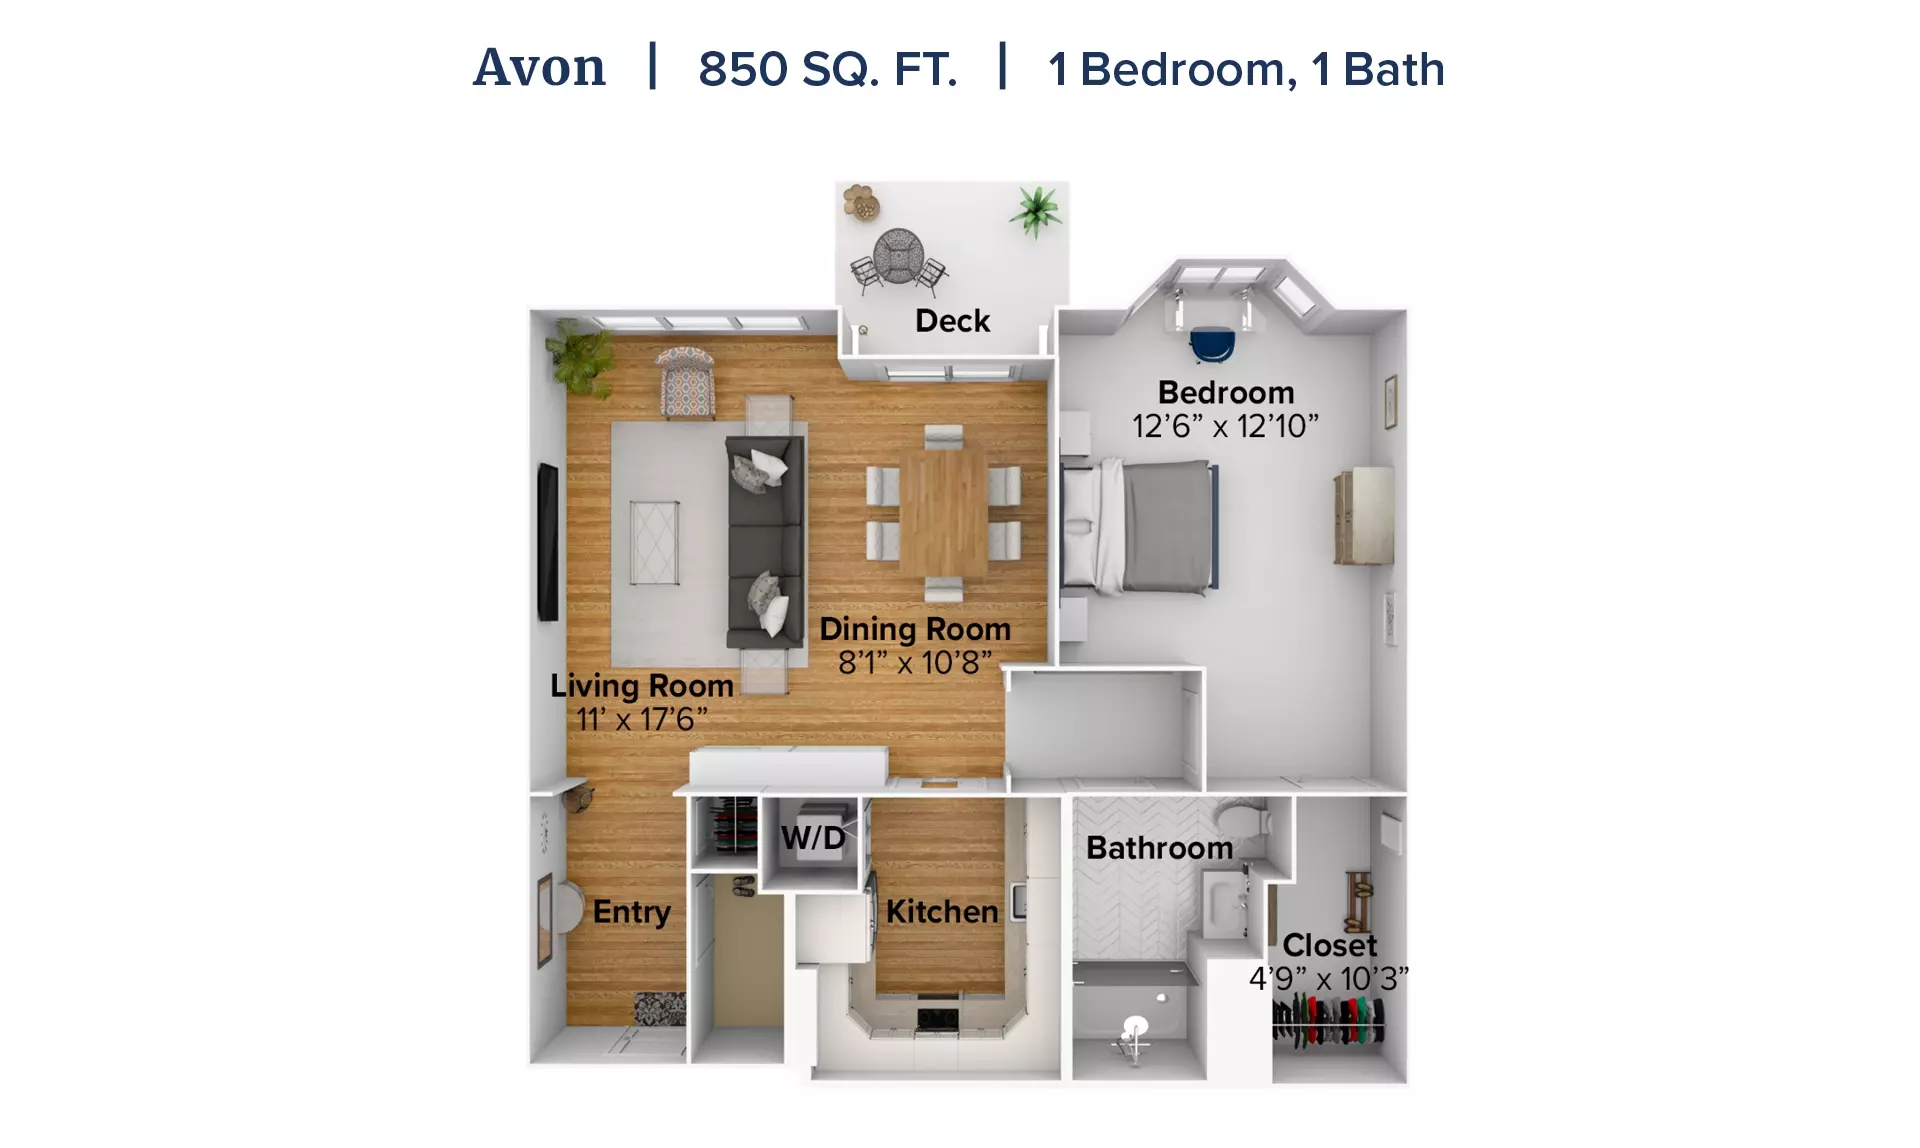 Avon apartment floor plan